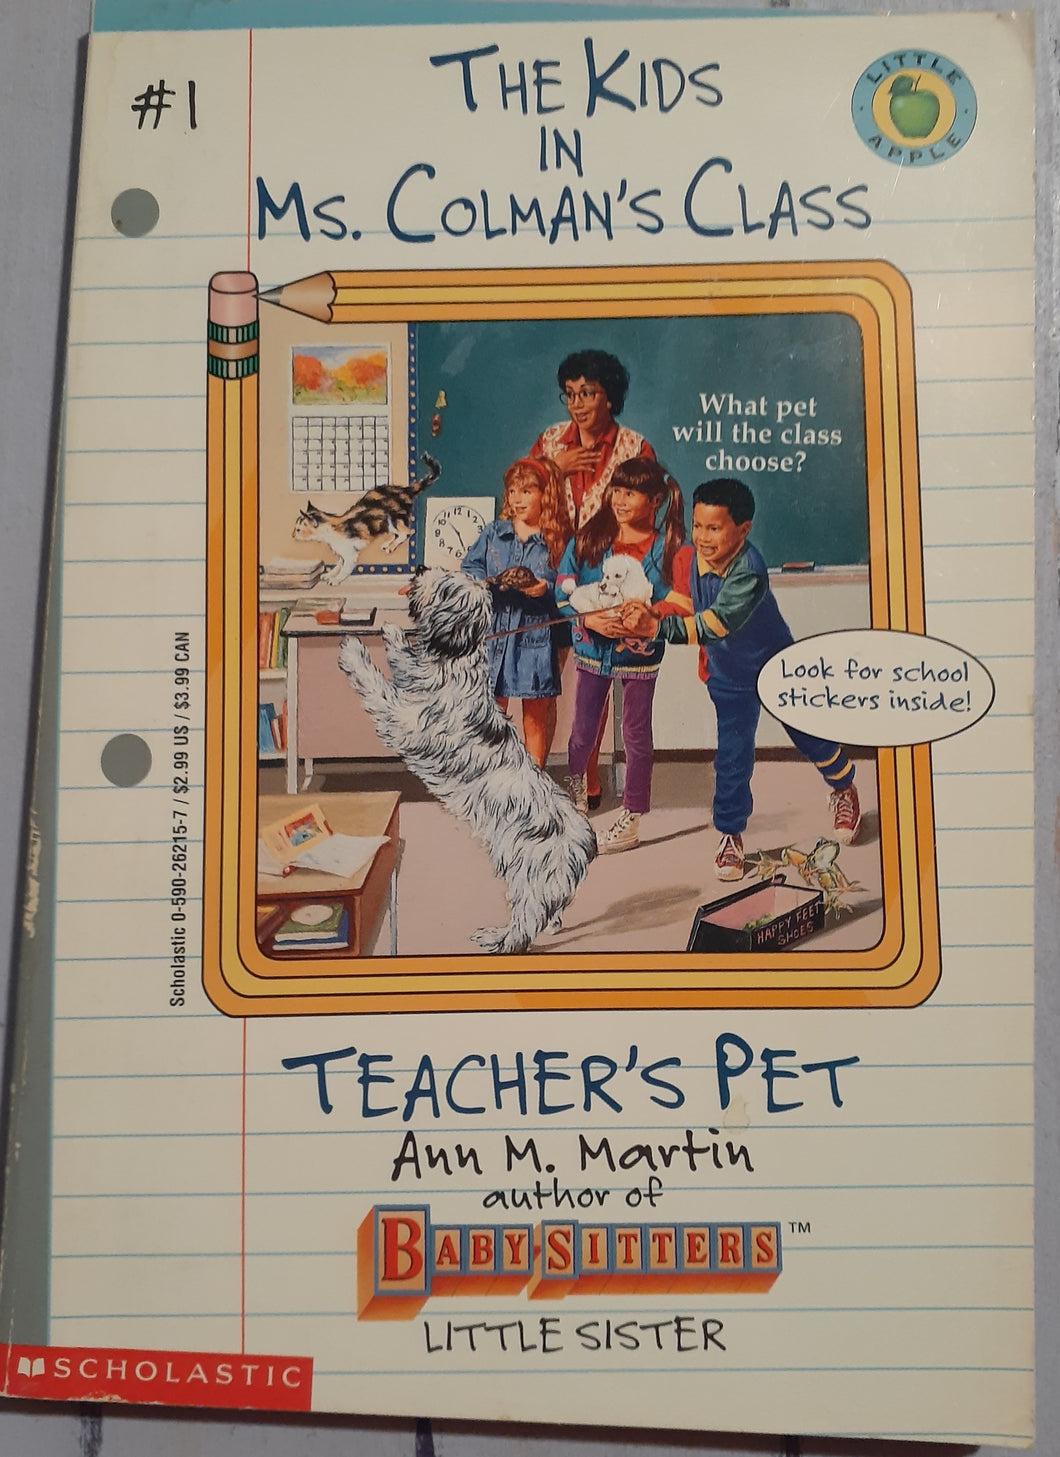 The Teacher's Pet (The Kids in Ms. Colman's Class #1)